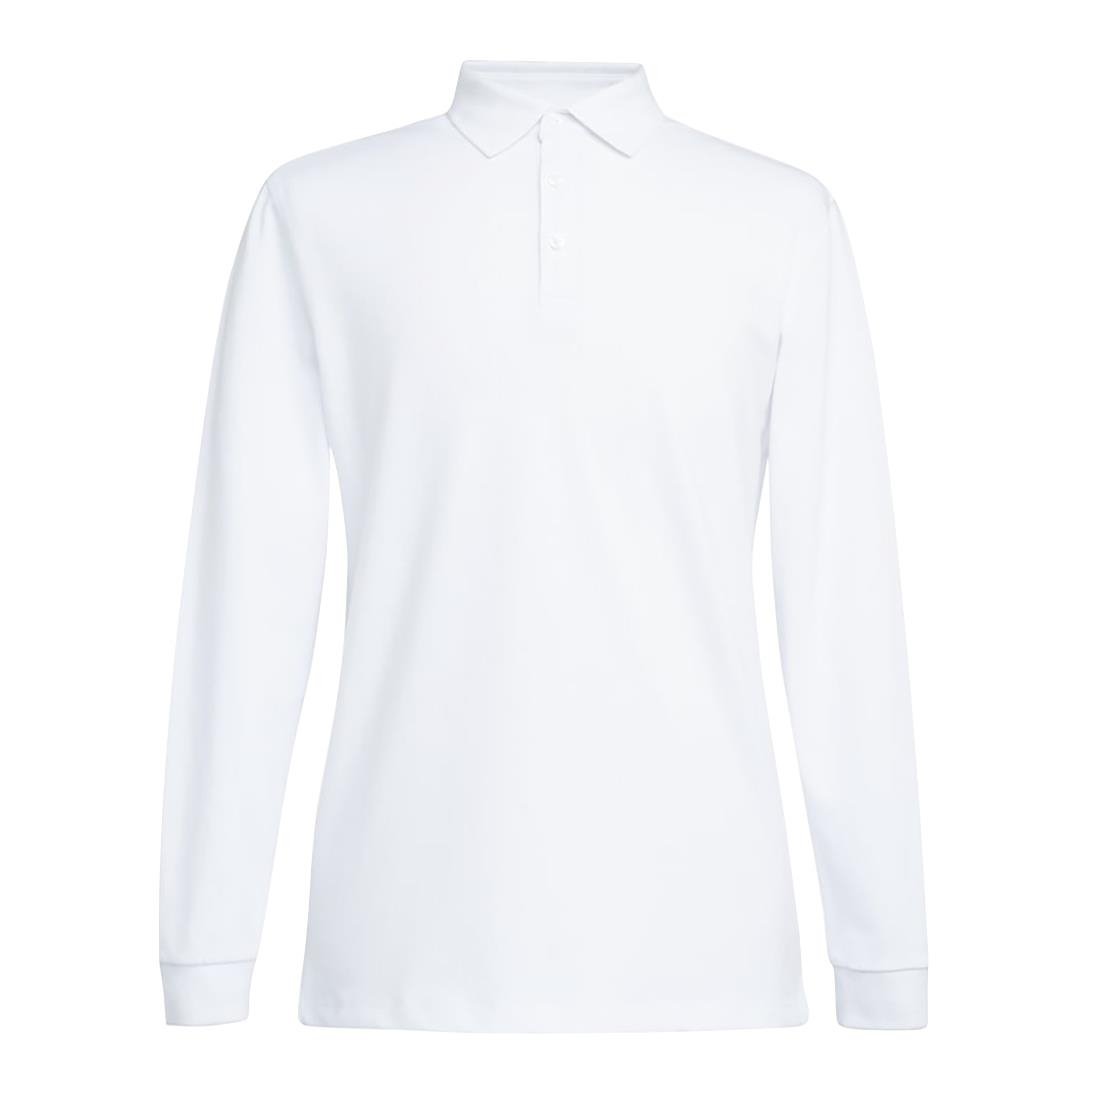 BA140-M Brook Taverner Frederick Mens Long Sleeve Polo Shirt White Size M